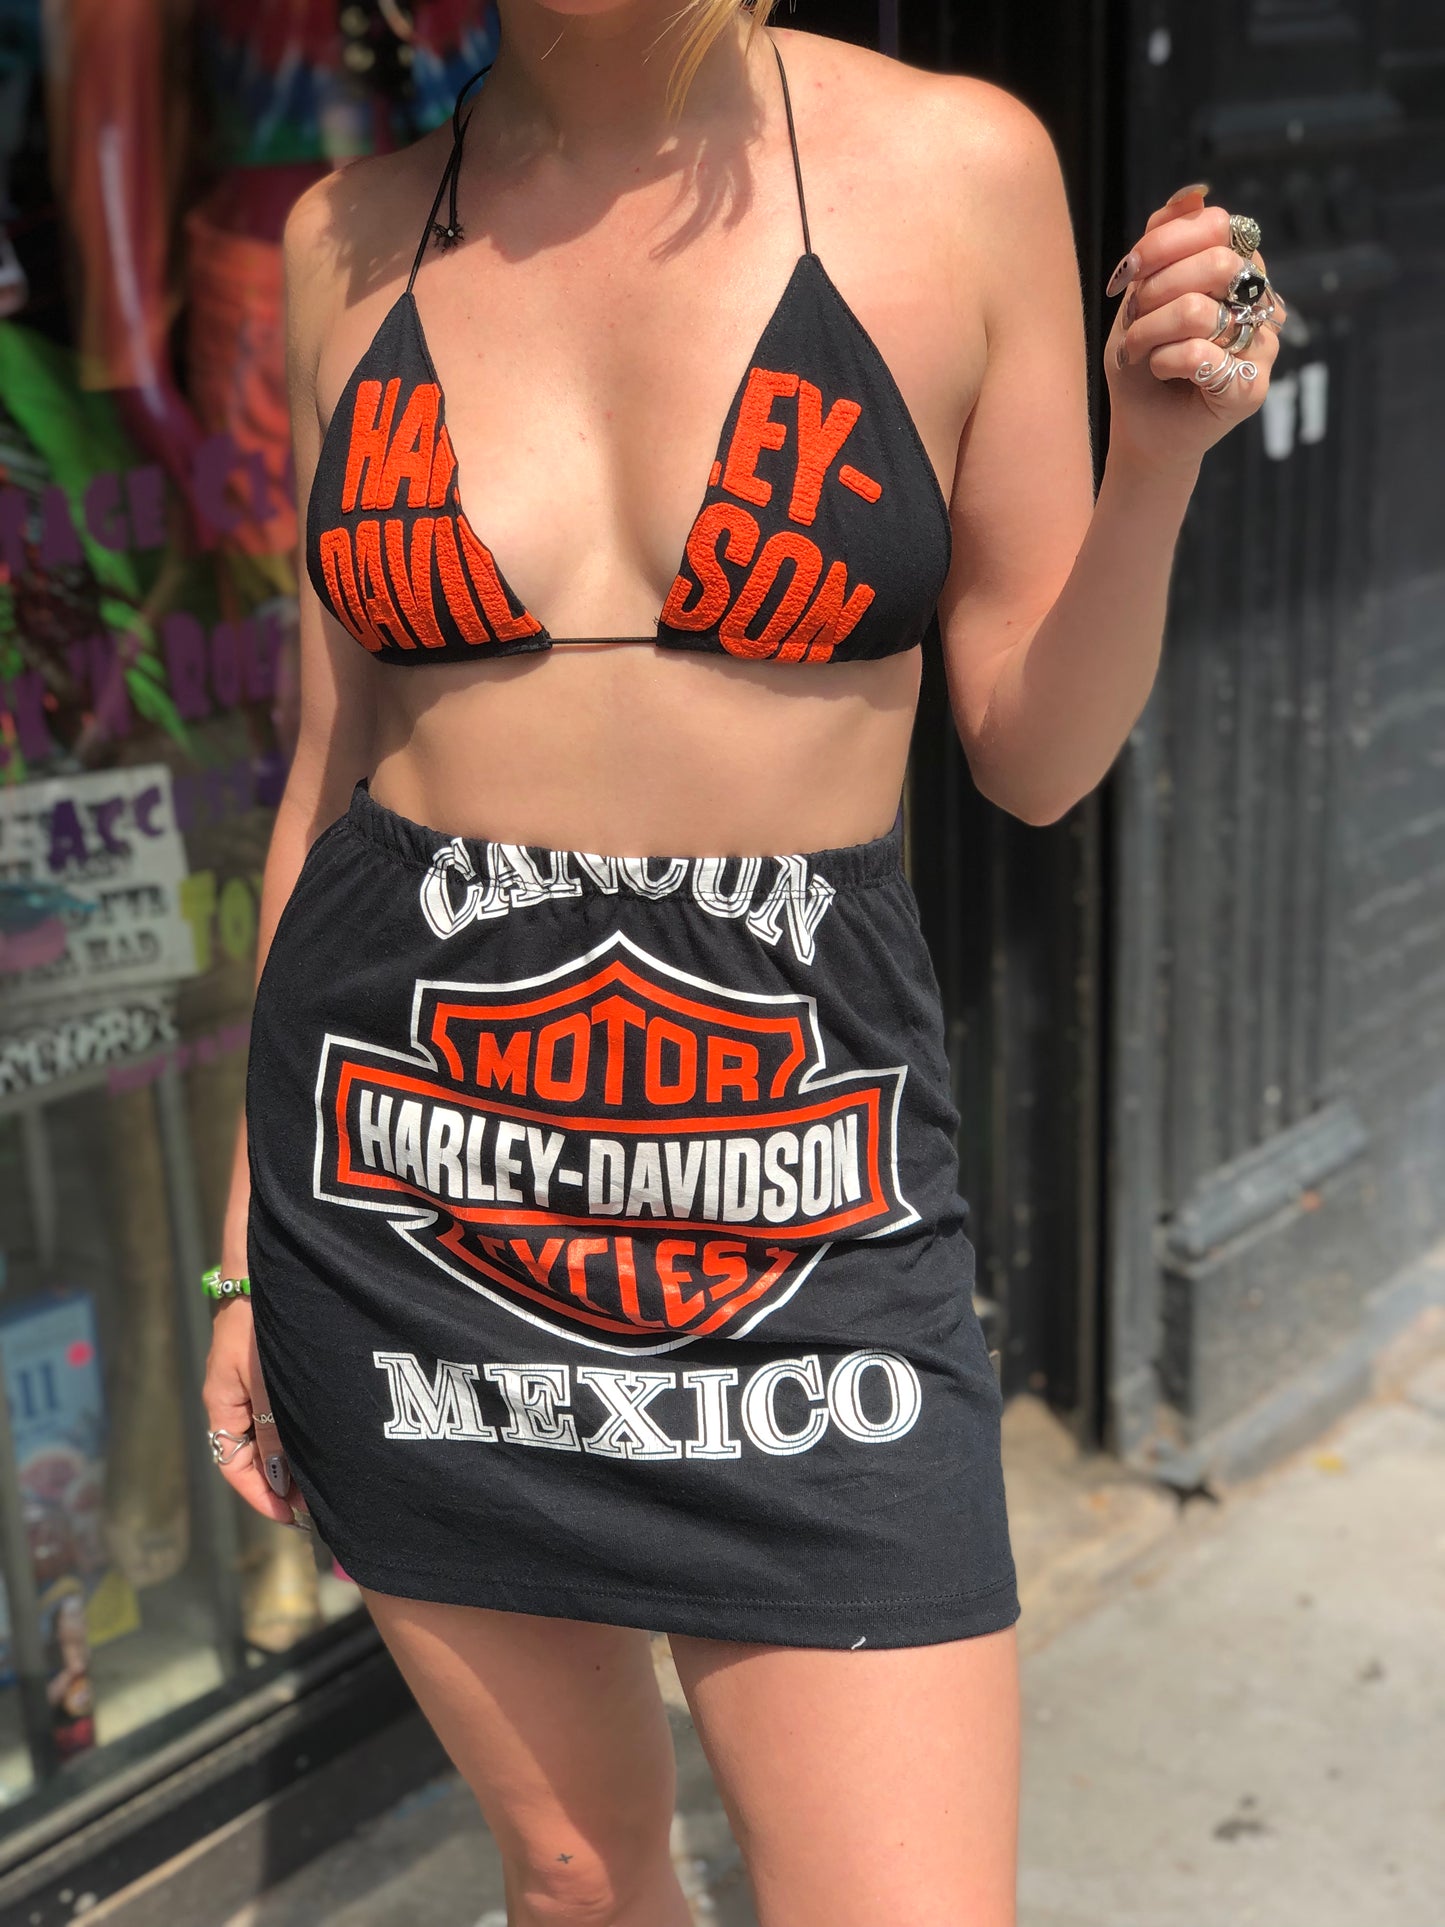 Reworked Vintage Harley Davidson Two Piece Set Bikini And Skirt - Spark Pretty